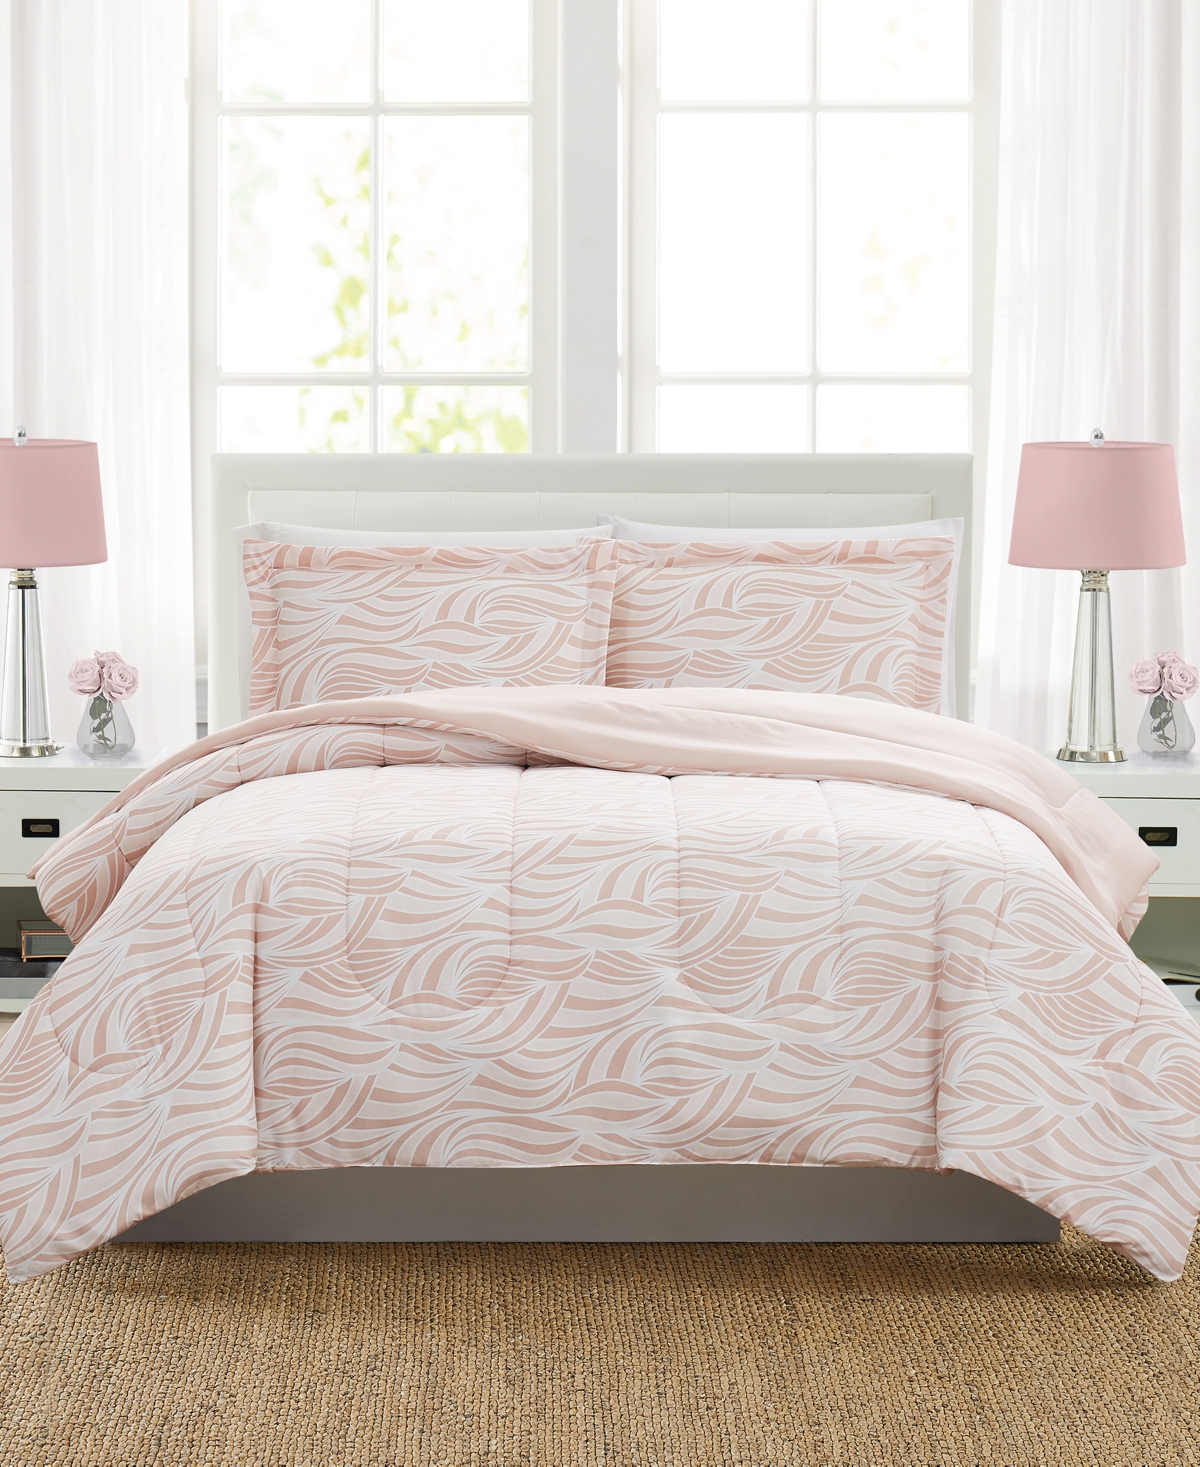 Pem America Samantha 3-pc. Full/queen Comforter Set Bedding In Pastel Pink